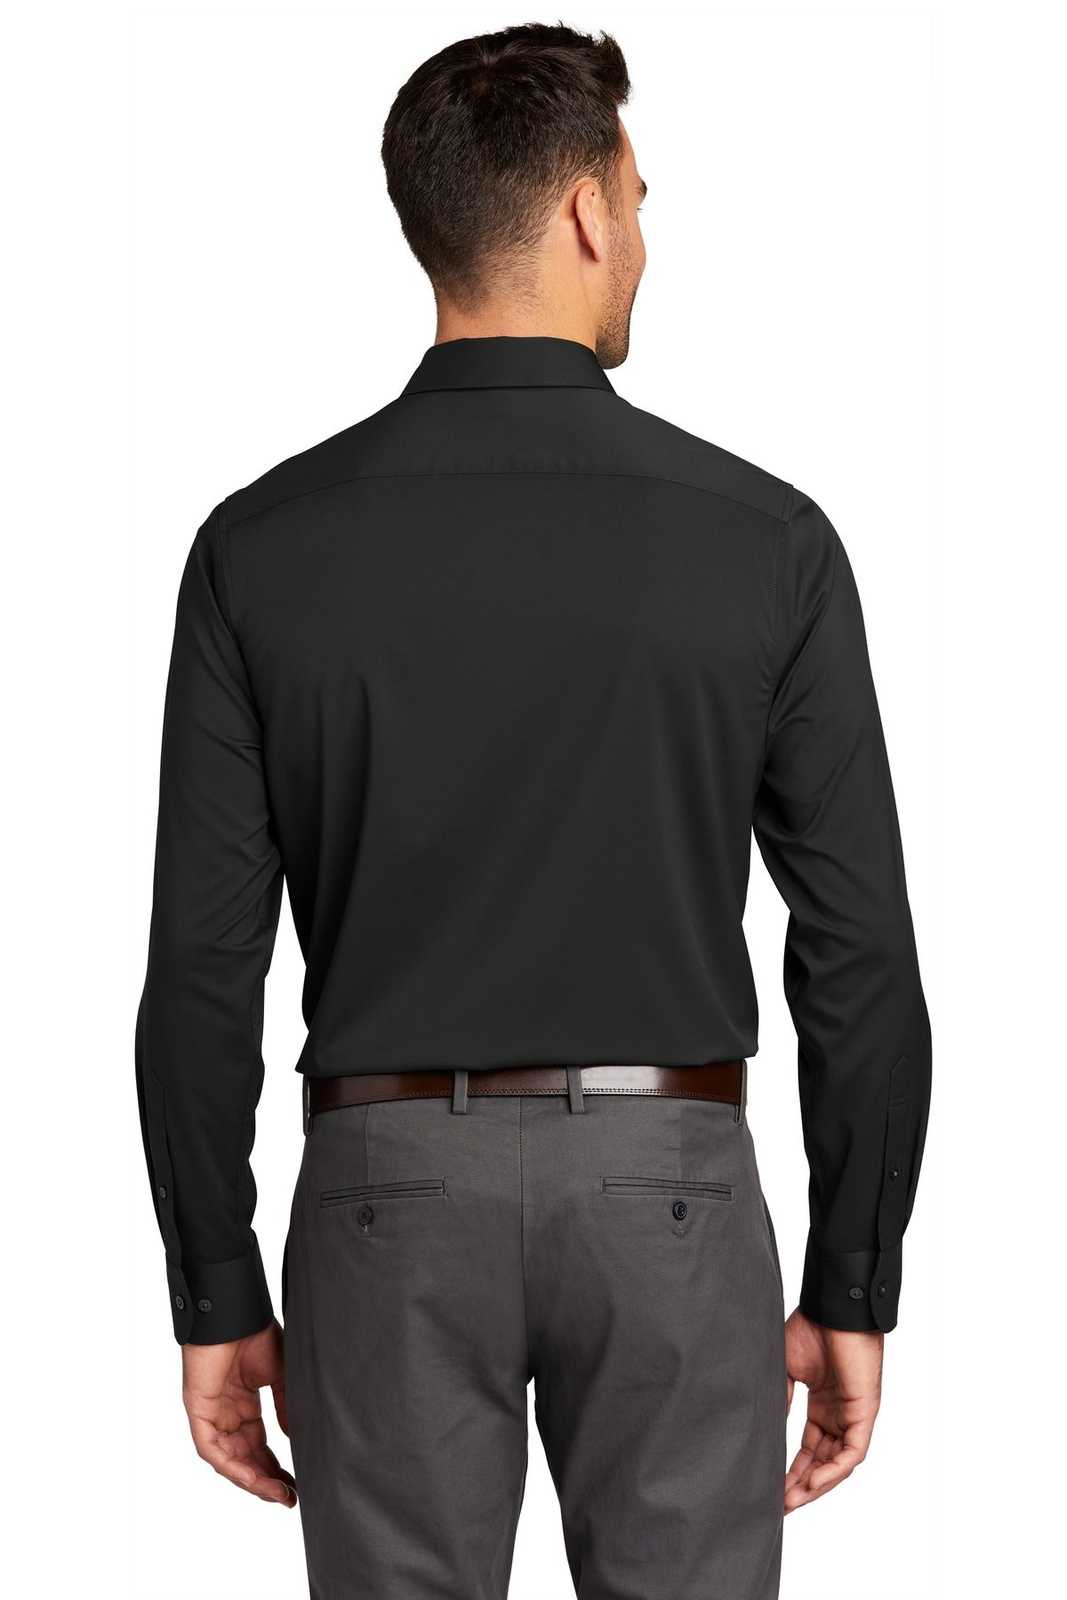 Port Authority W680 City Stretch Shirt - Black - HIT a Double - 2